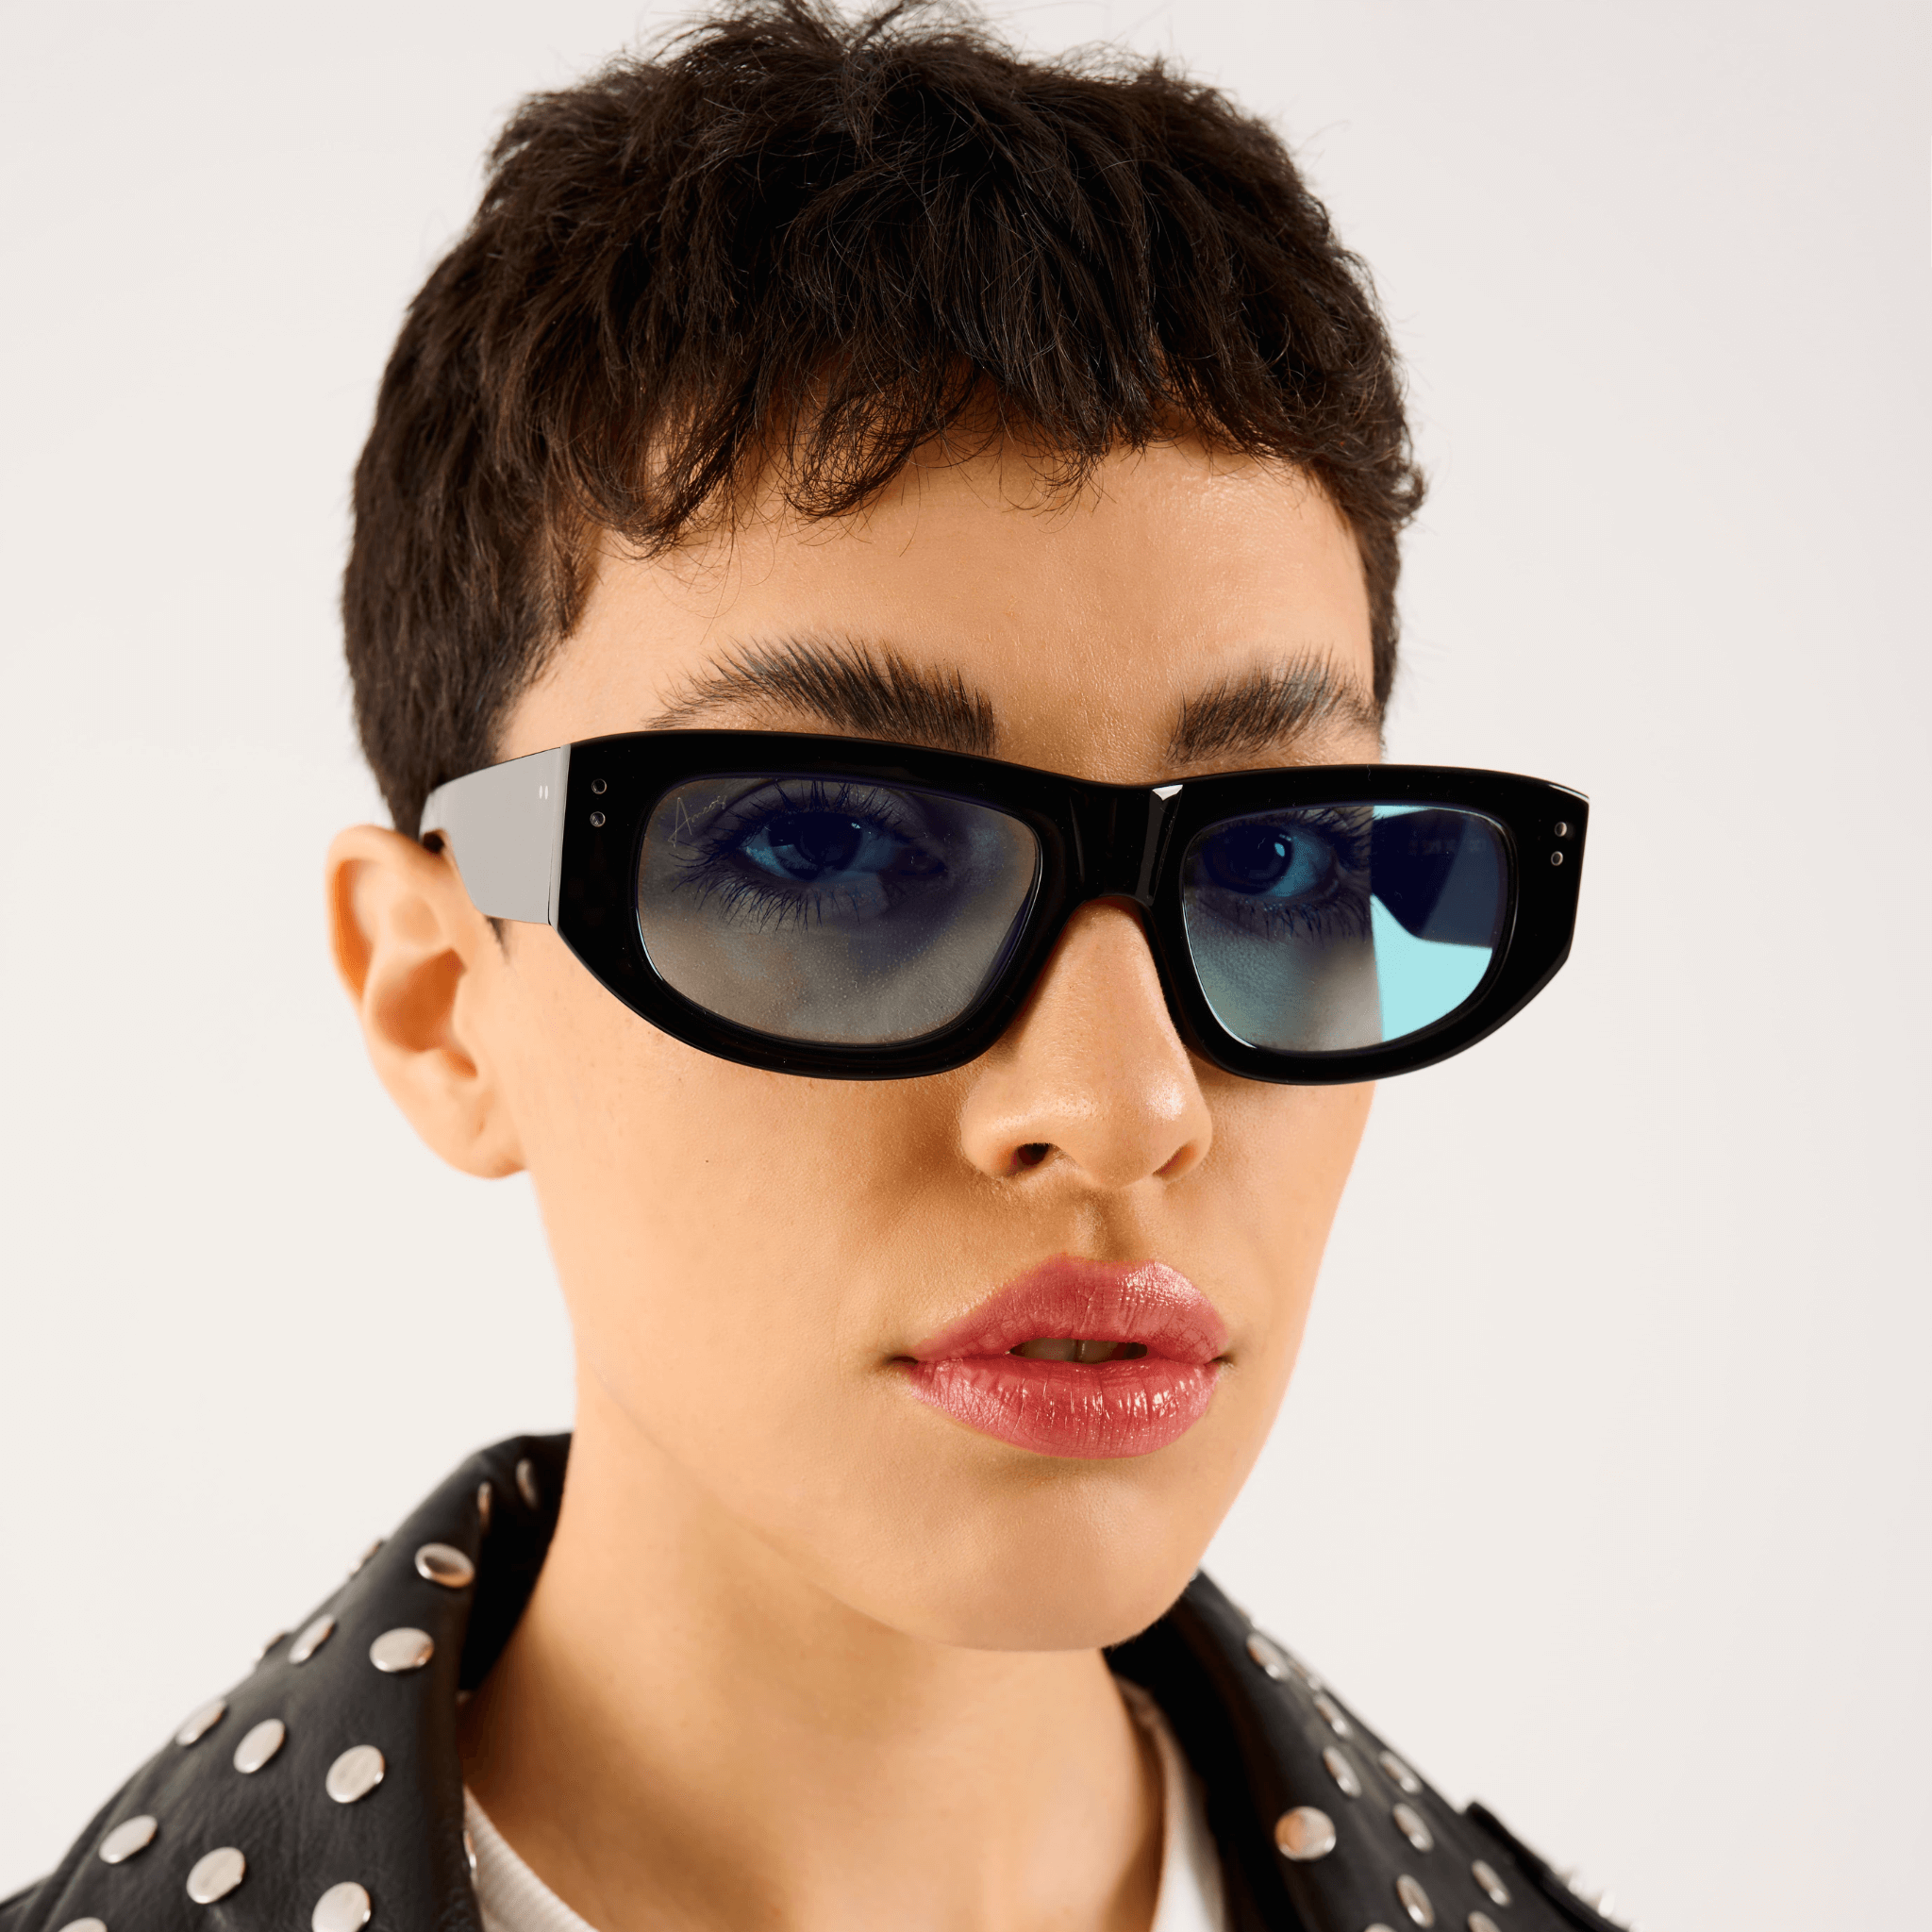 Ameos Forever collection Lex model. Black frames with turquoise lenses. Genderless, gender neutral eyewear